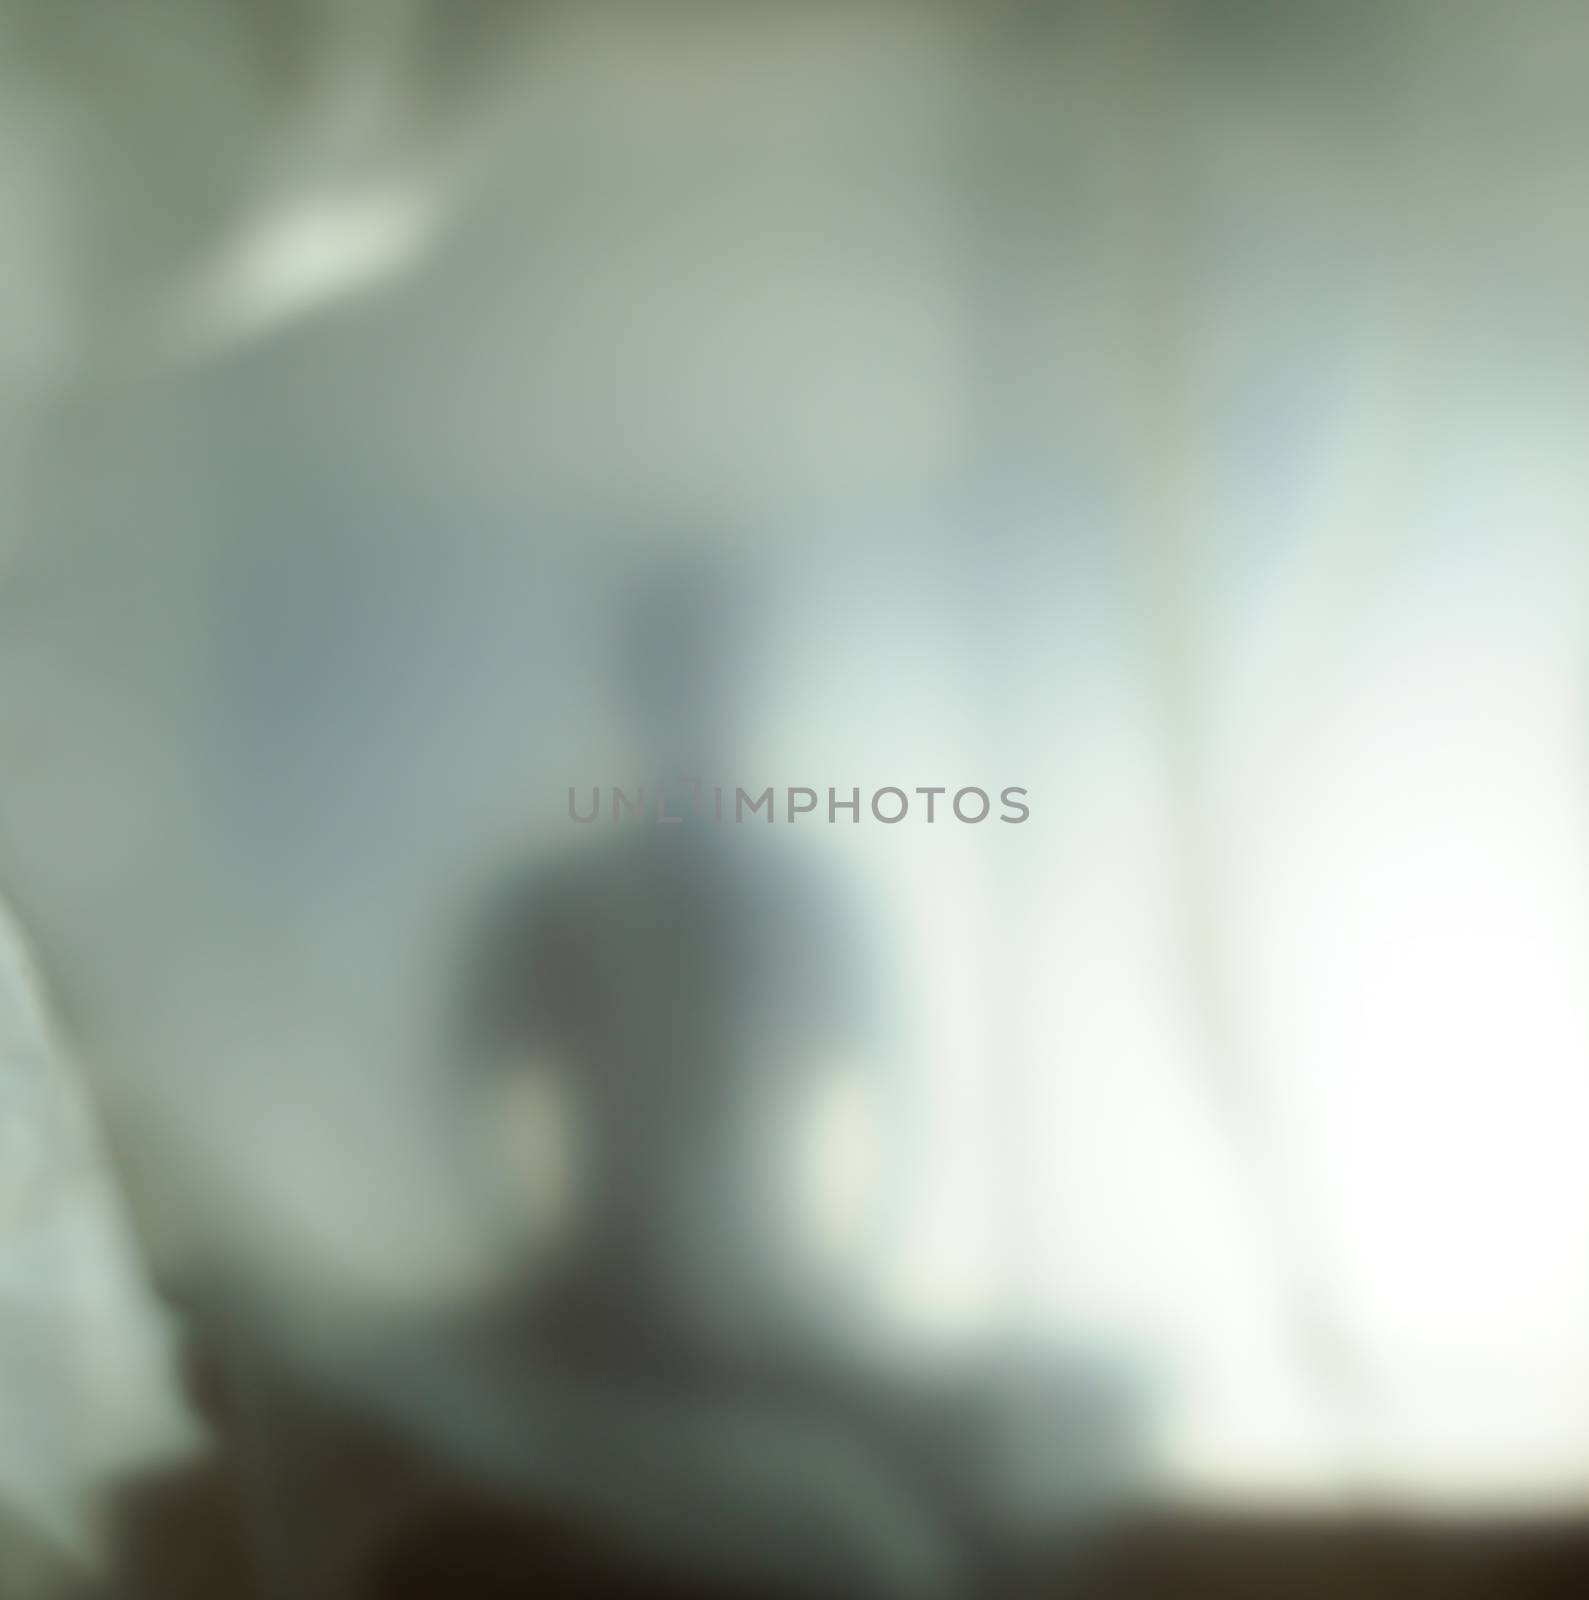 Blurred silhouette of human spirit against light